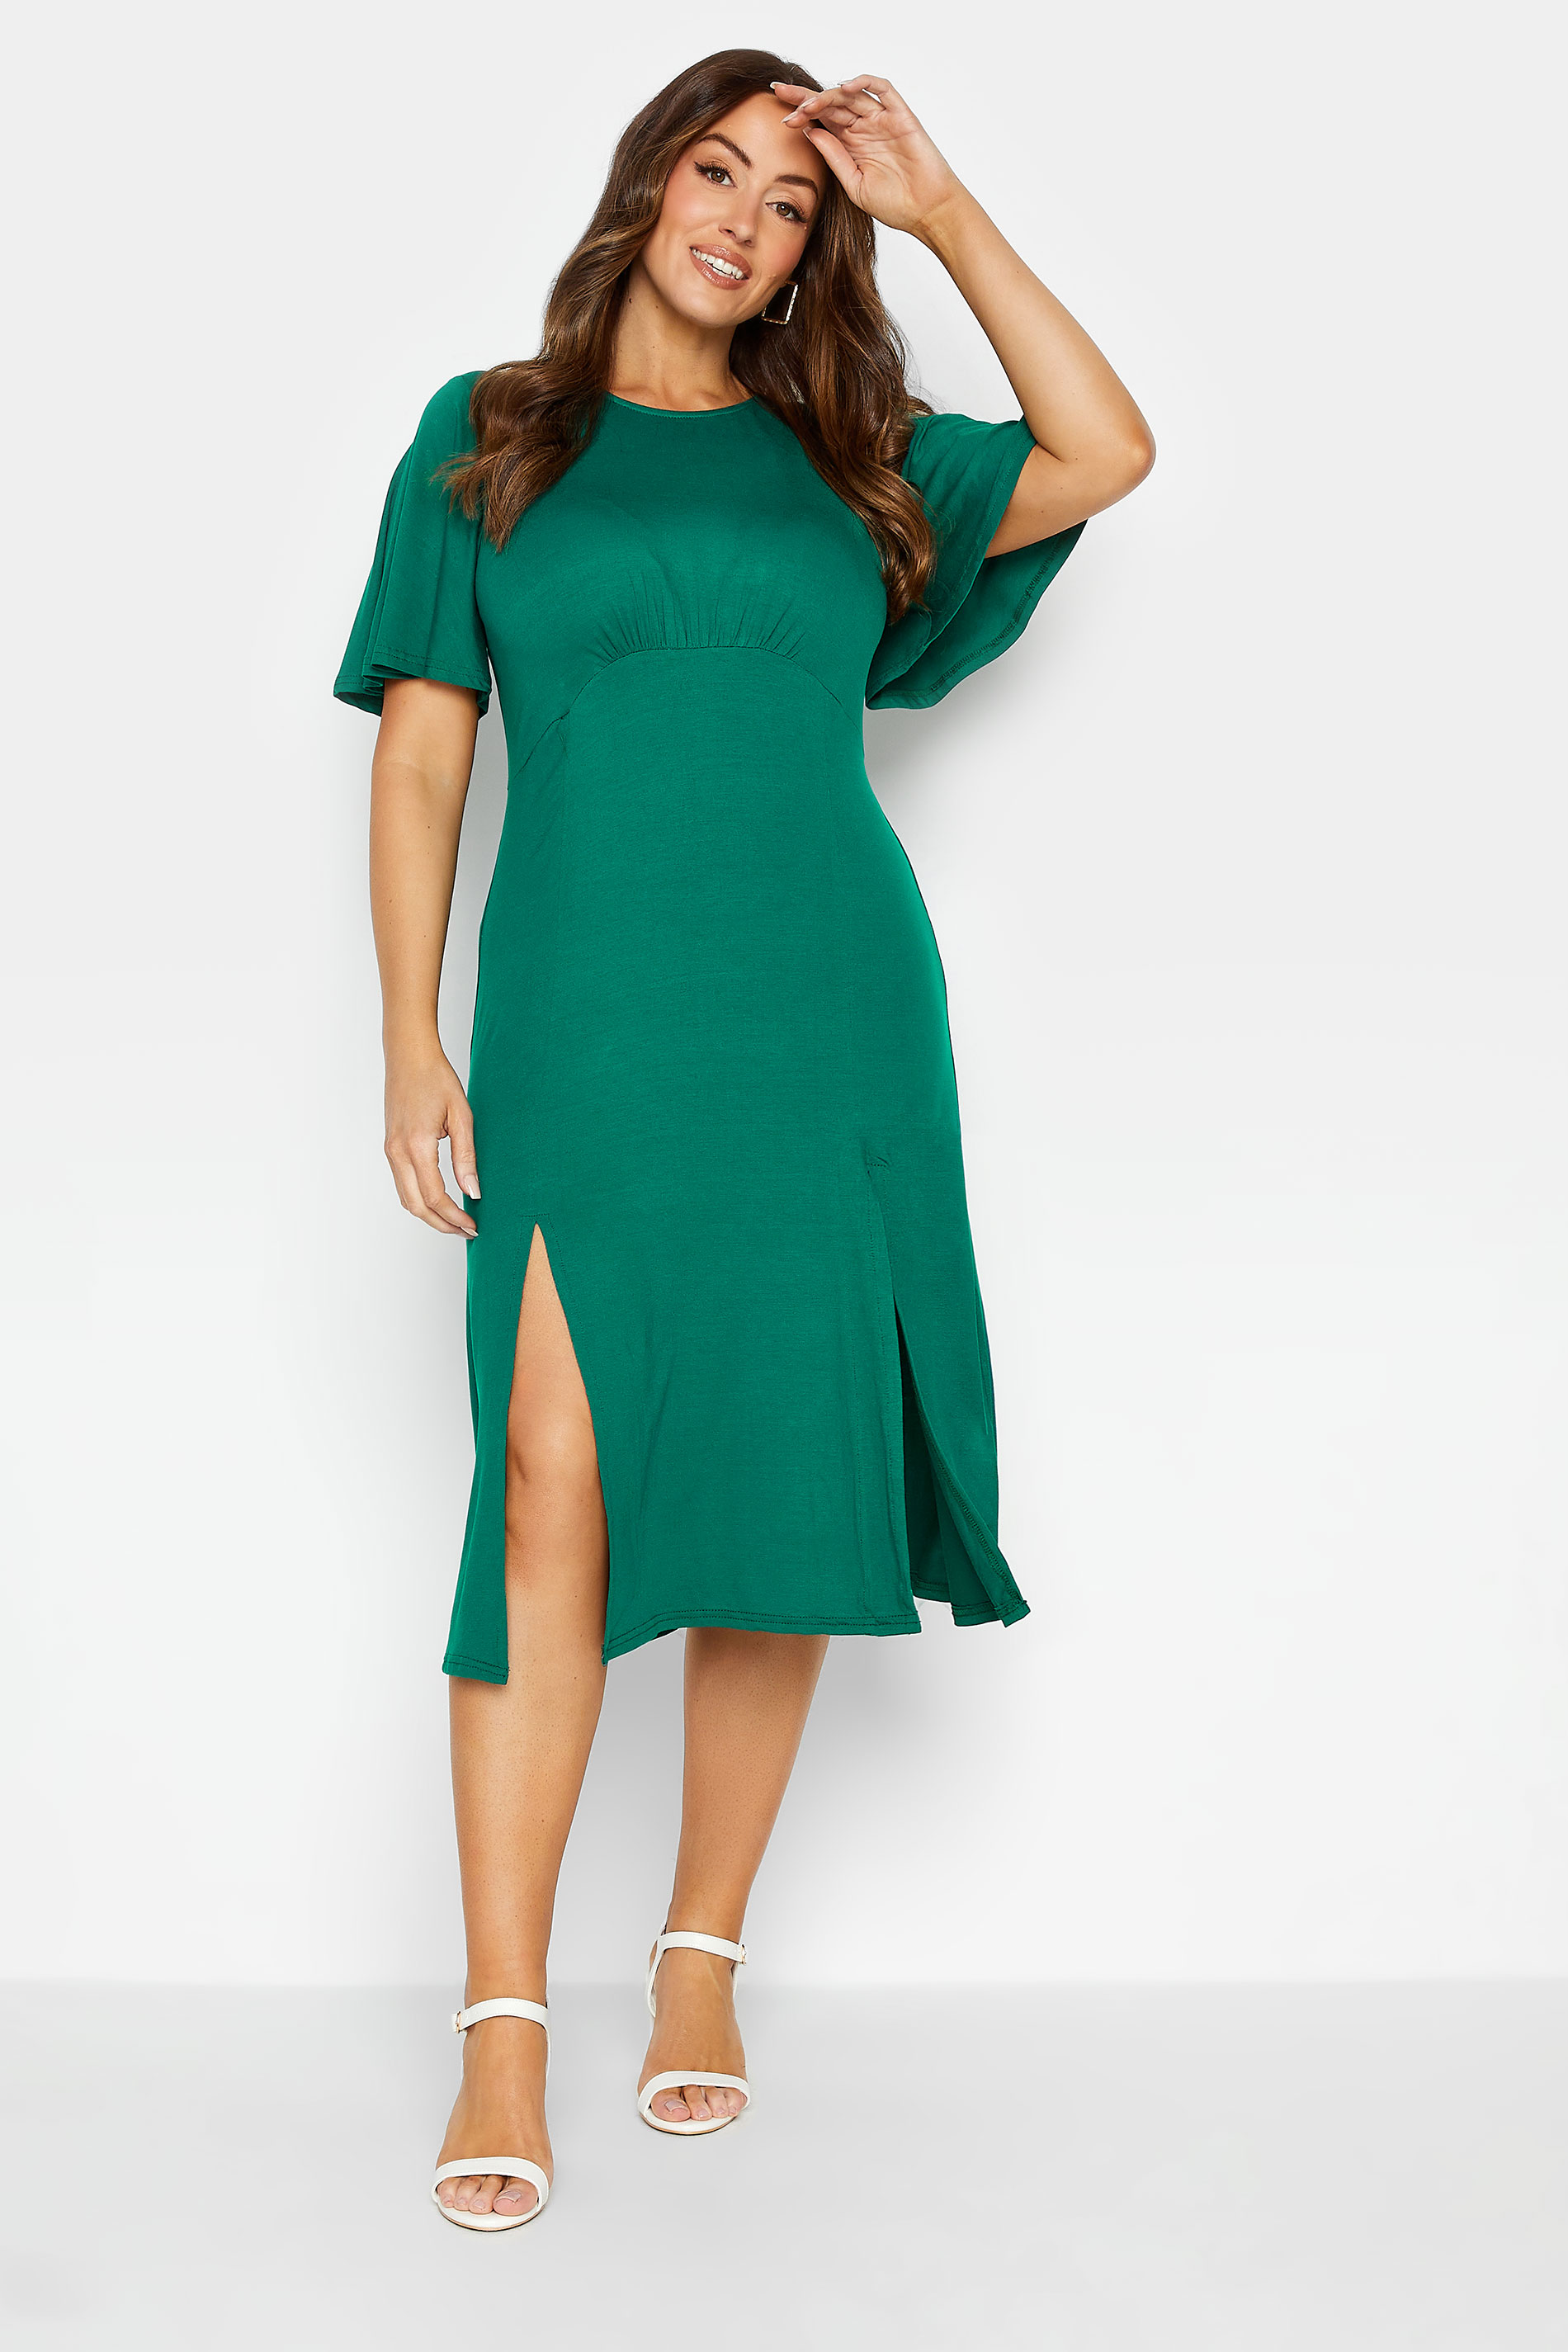 M&Co Forest Green Angel Sleeve Split Hem Midi Dress | M&Co 2